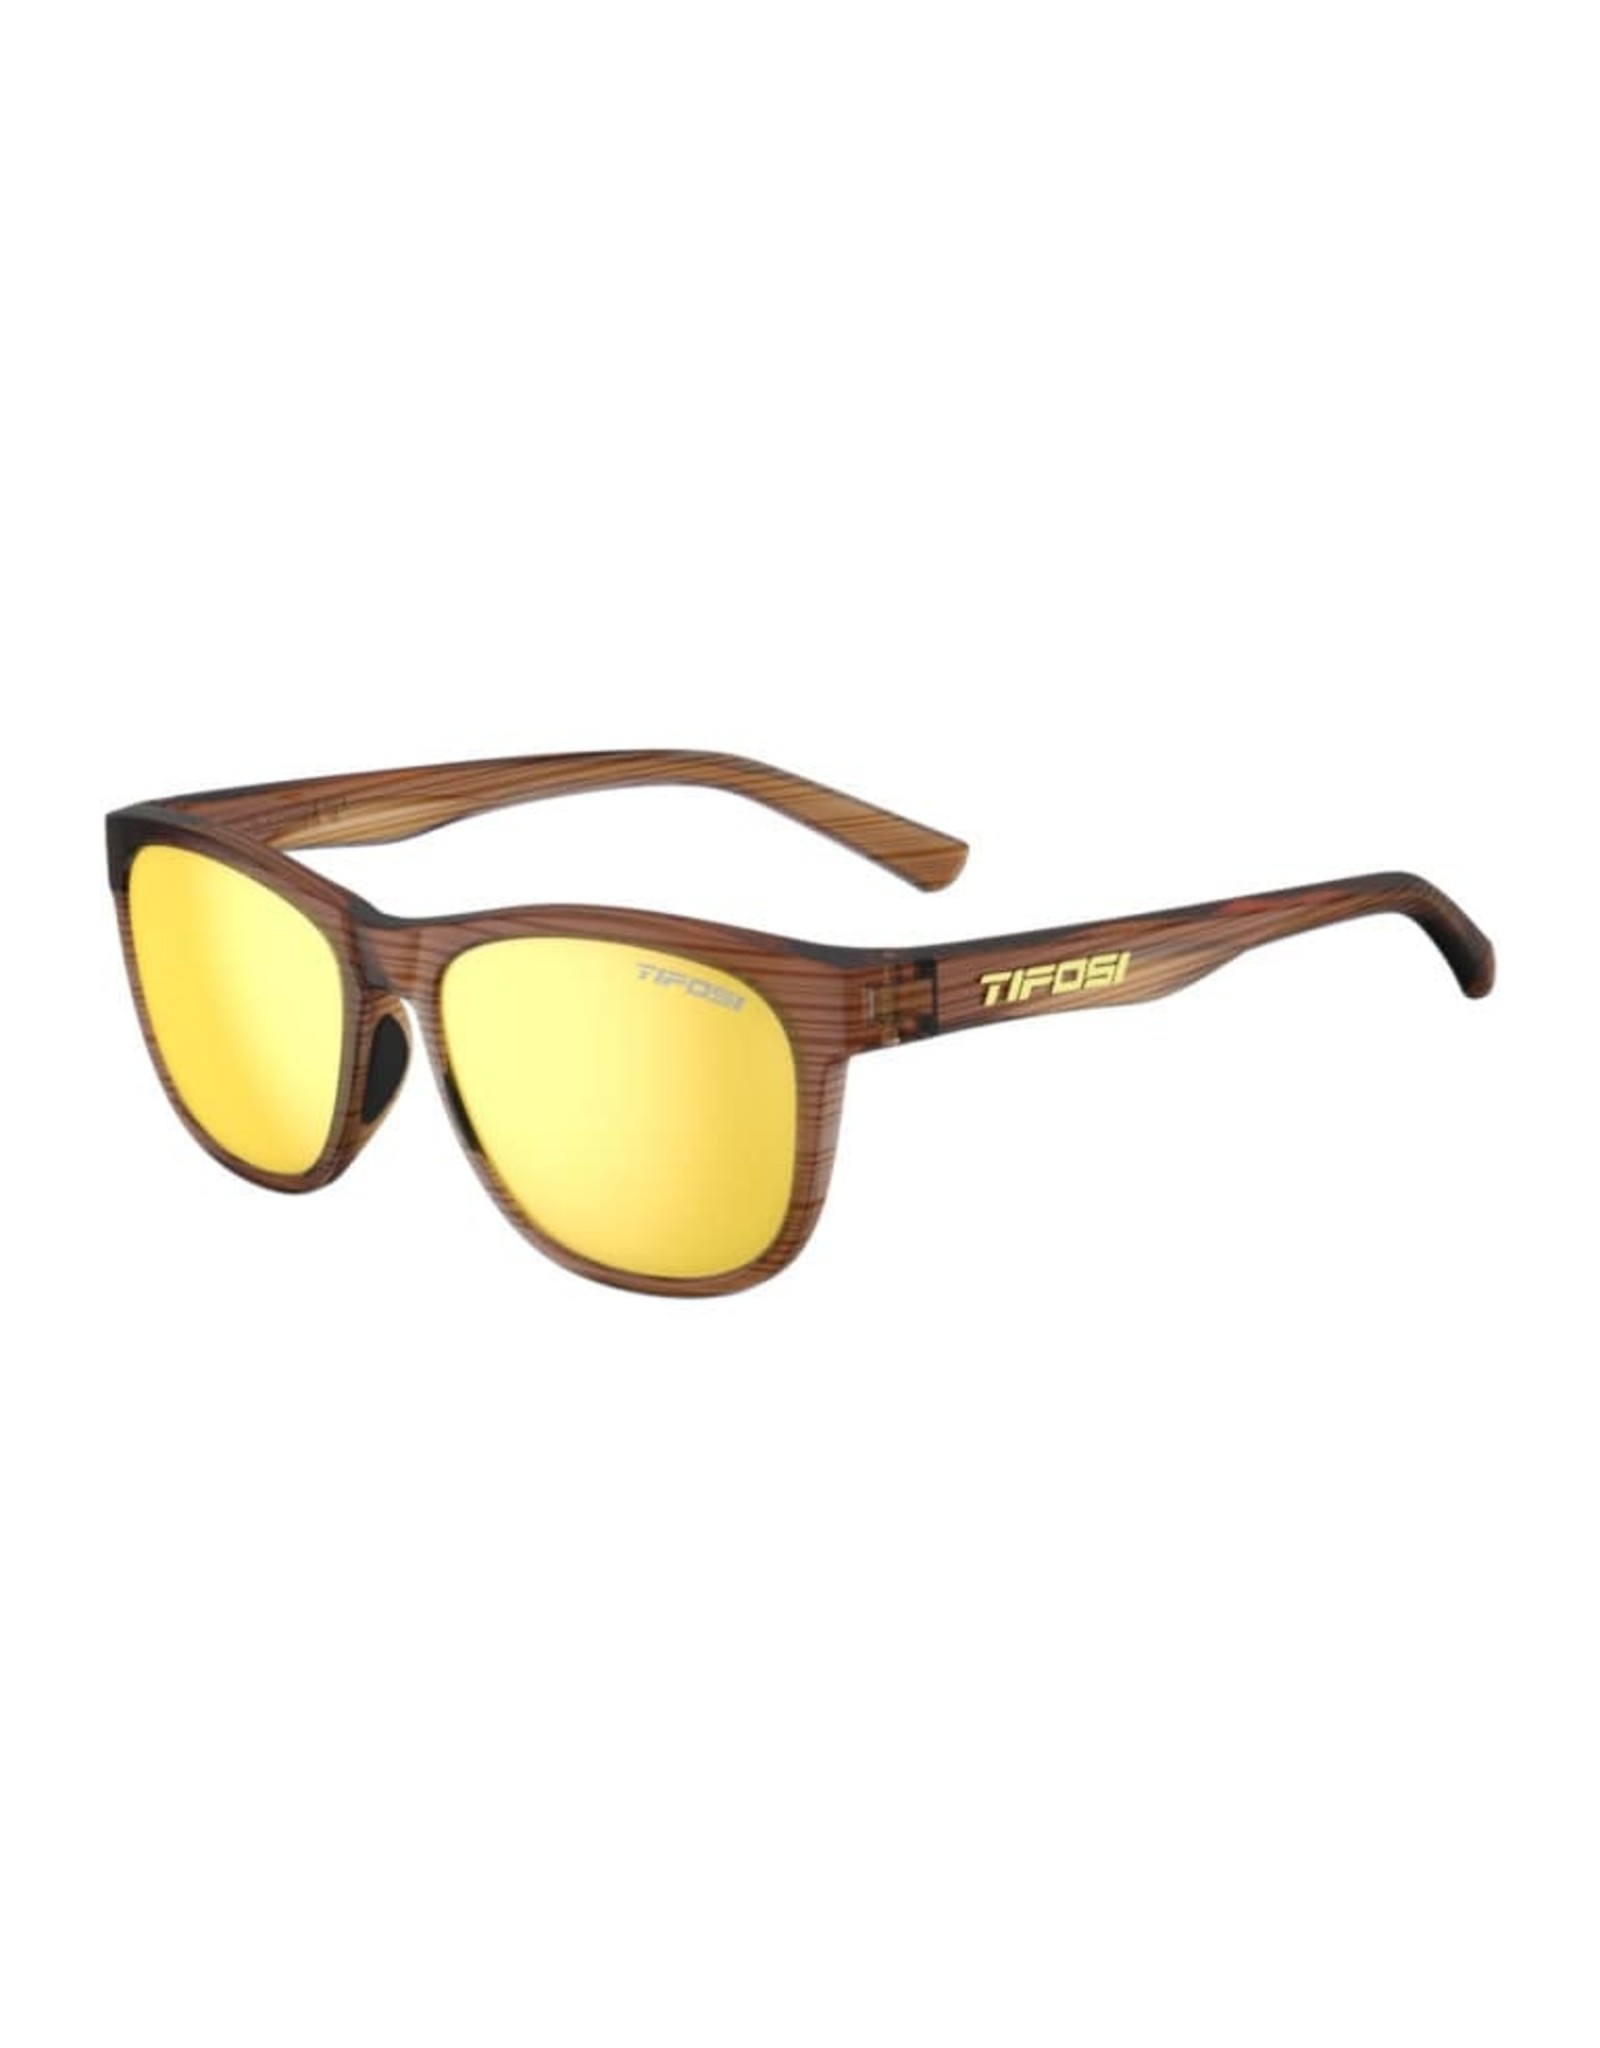 Tifosi Optics Swank, Woodgrain Single Lens Sunglasses - Smoke Yellow